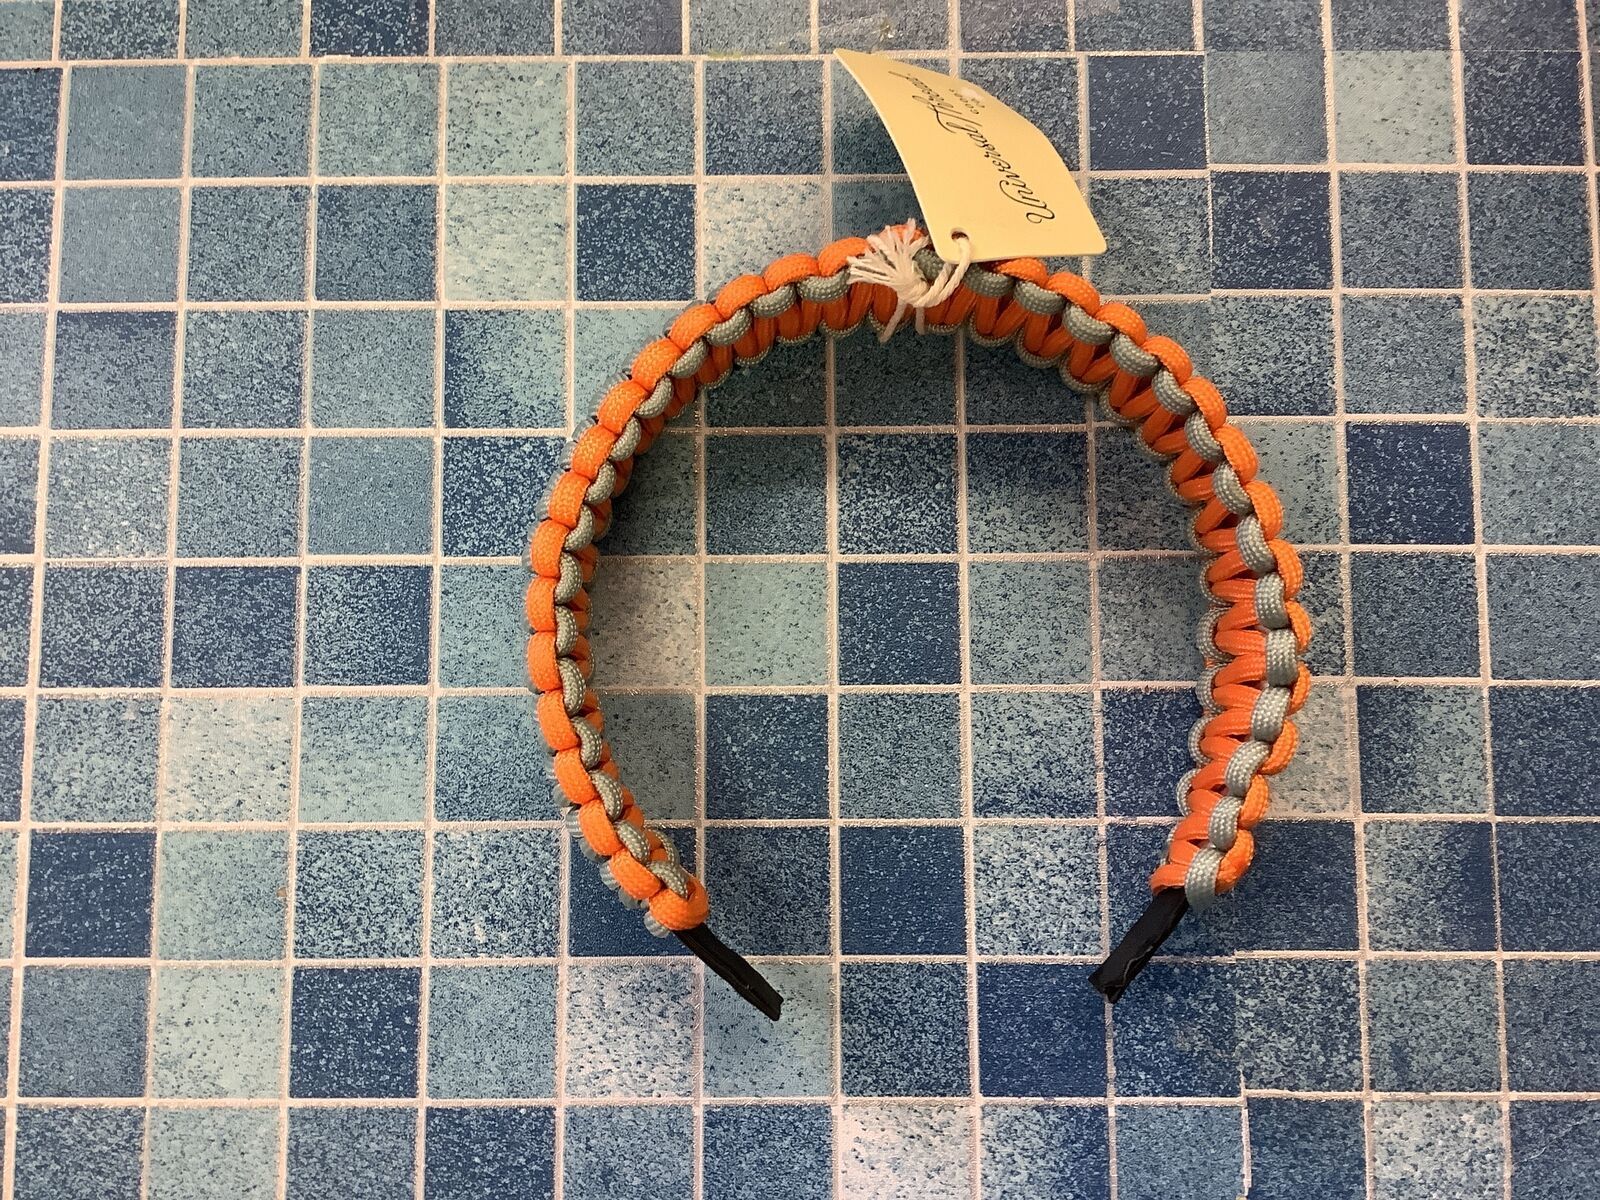 Paracord Headband - Universal Thread Blue/Orange - $7.94